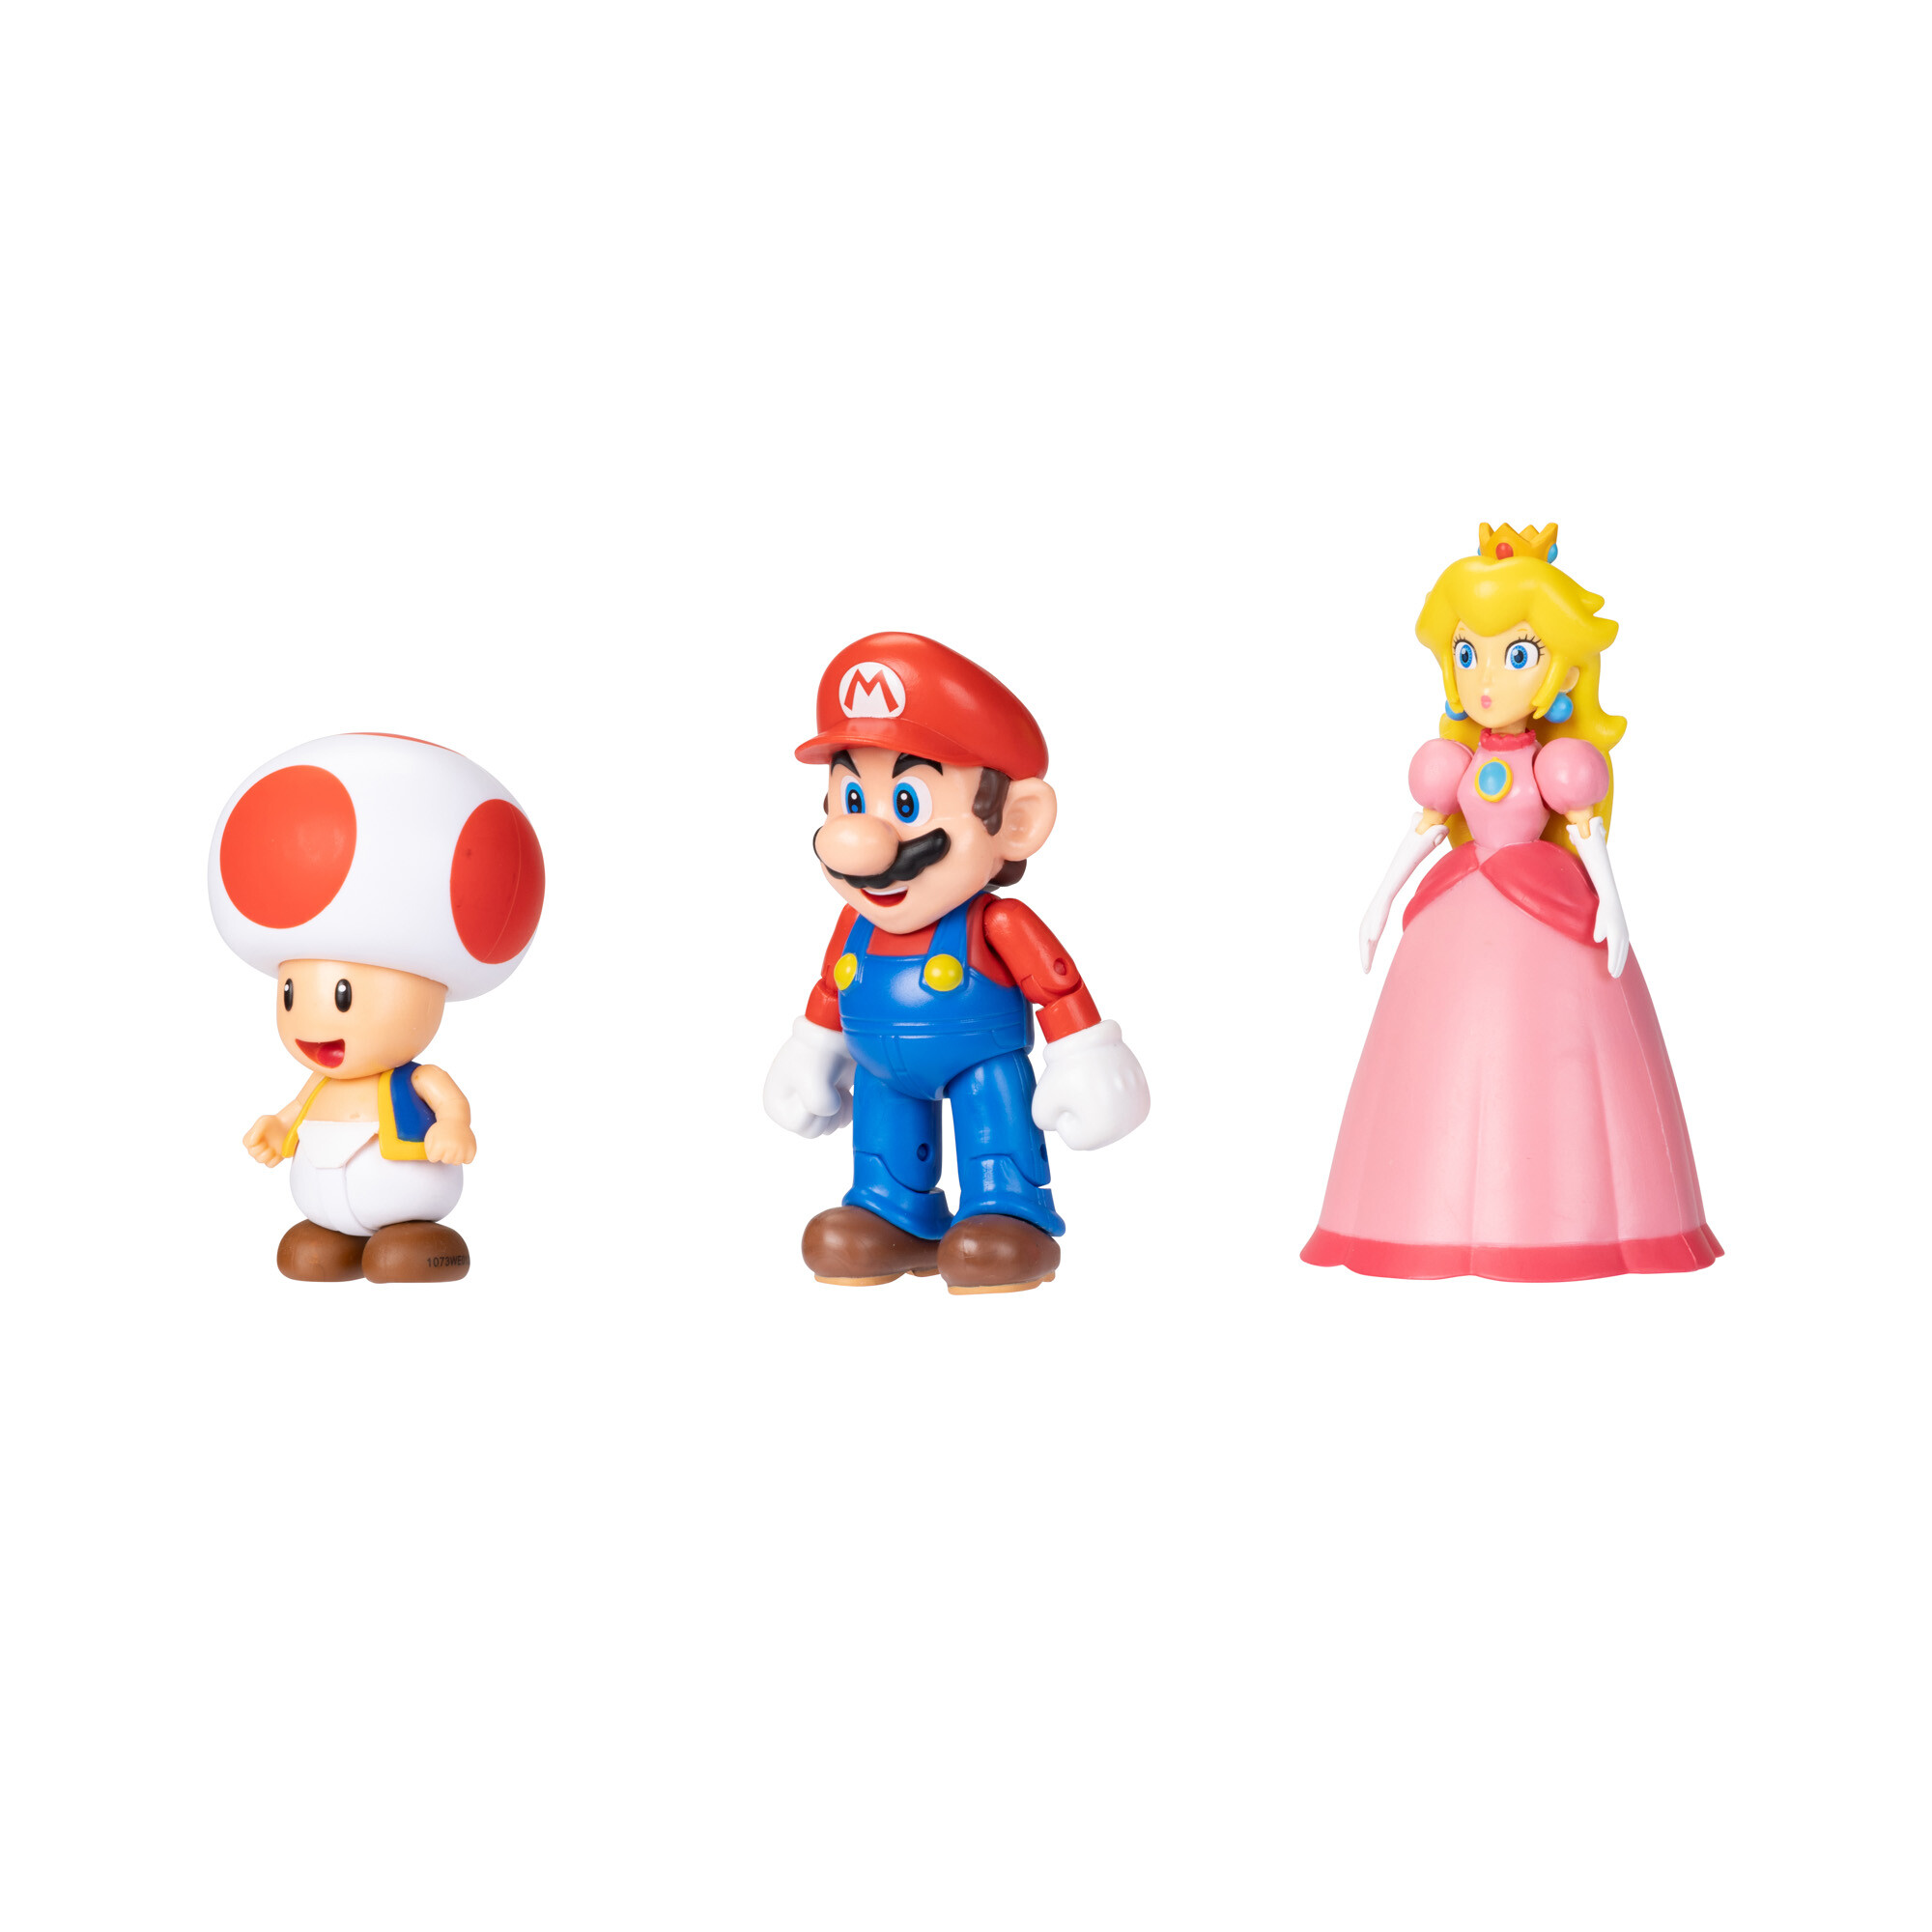 Nintendo super mario personaggi articolati 10 cm, pacco da 3 - NINTENDO, Super Mario